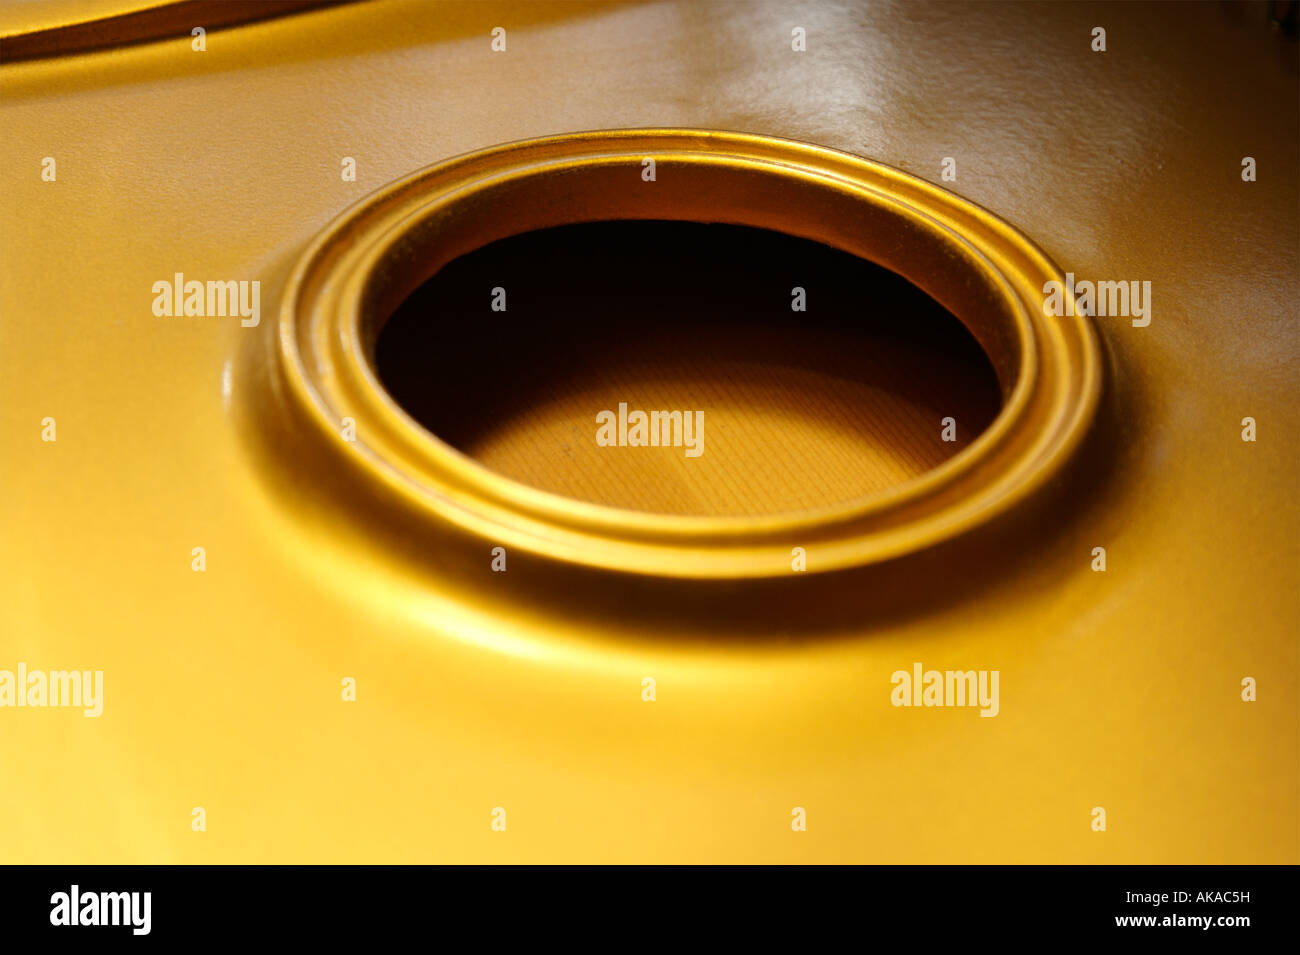 A Circle on a gold piano soundboard Stock Photo